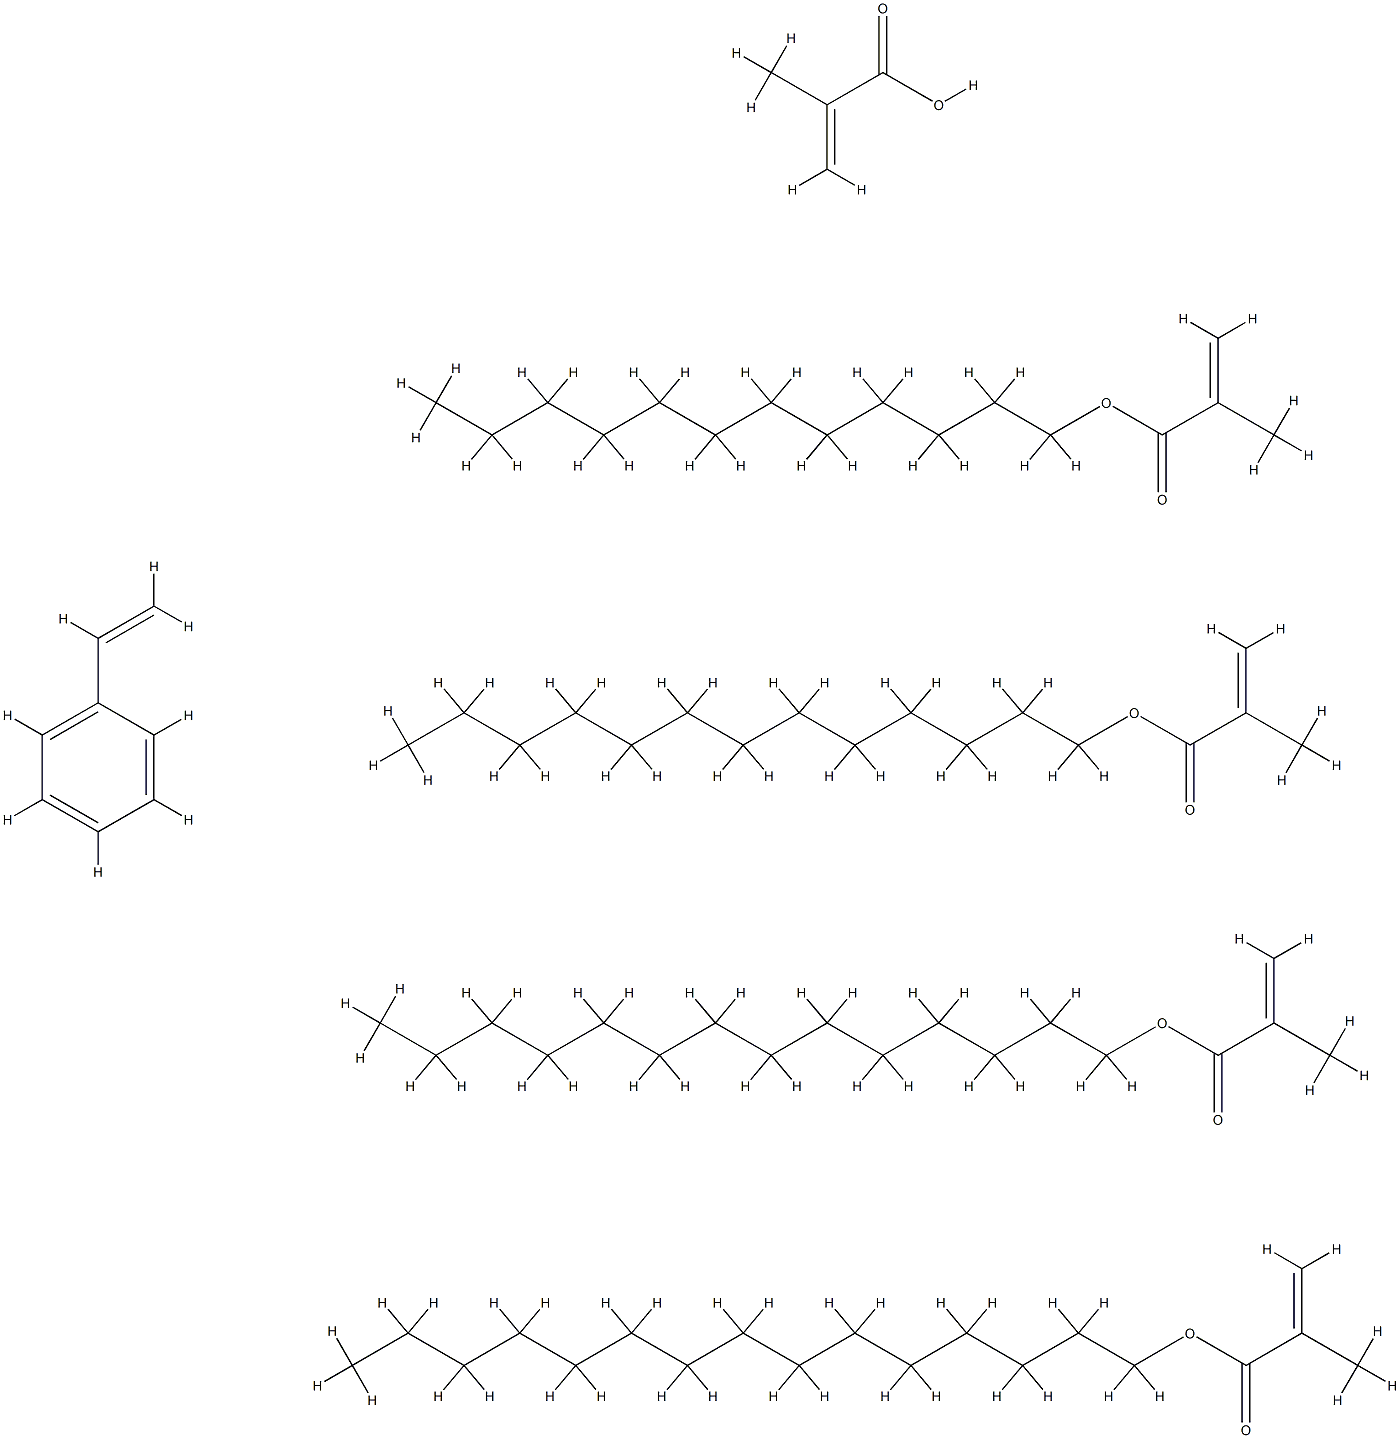 2-Propenoic acid, 2-methyl-, polymer with dodecyl 2-methyl-2-propenoate, ethenylbenzene, pentadecyl 2-methyl-2-propenoate, tetradecyl 2-methyl-2-propenoate and tridecyl 2-methyl-2-propenoate|